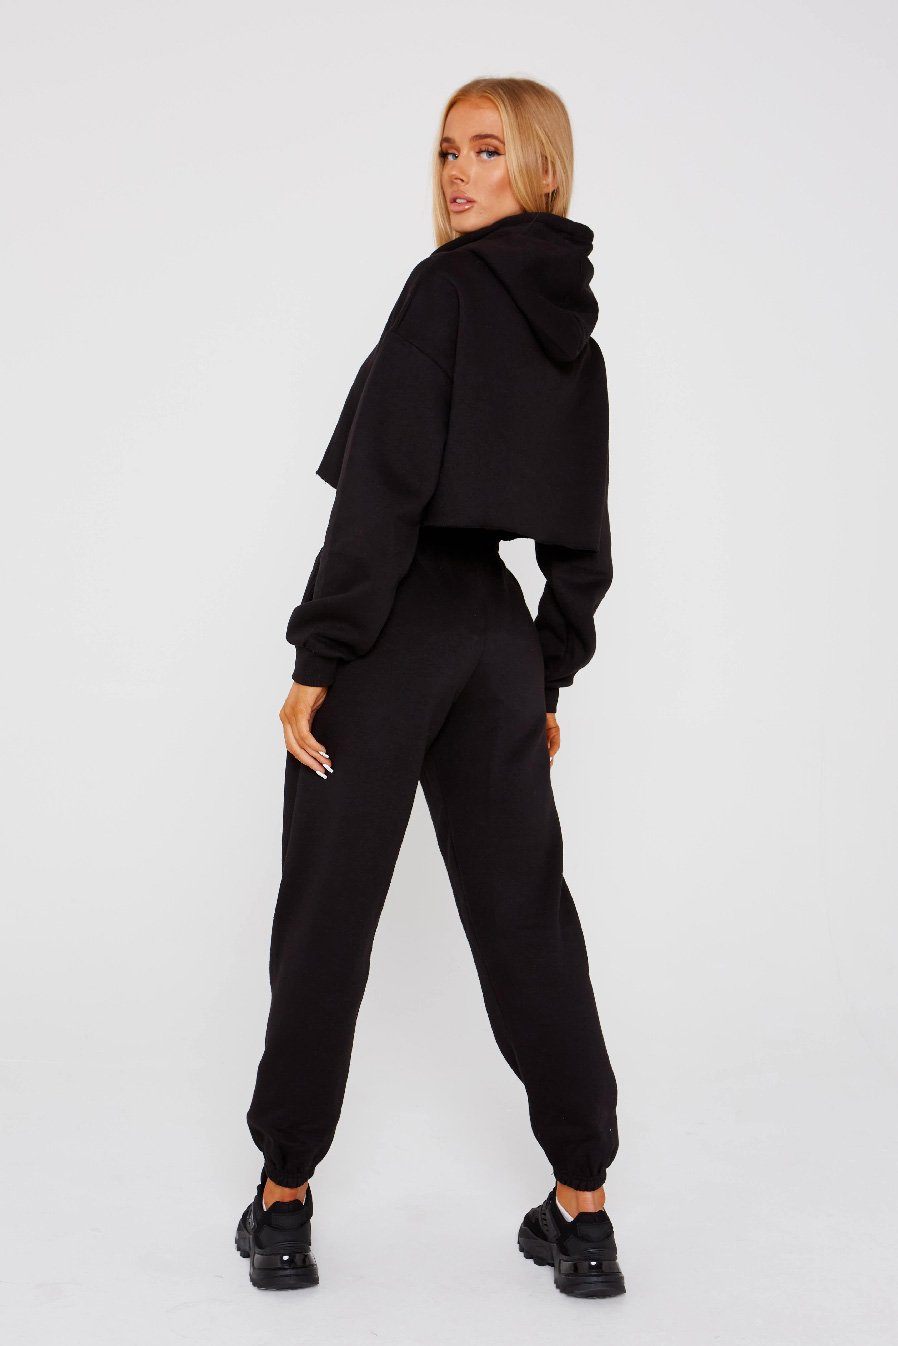 Black Crop Tracksuit Loungewear Set - Olivia